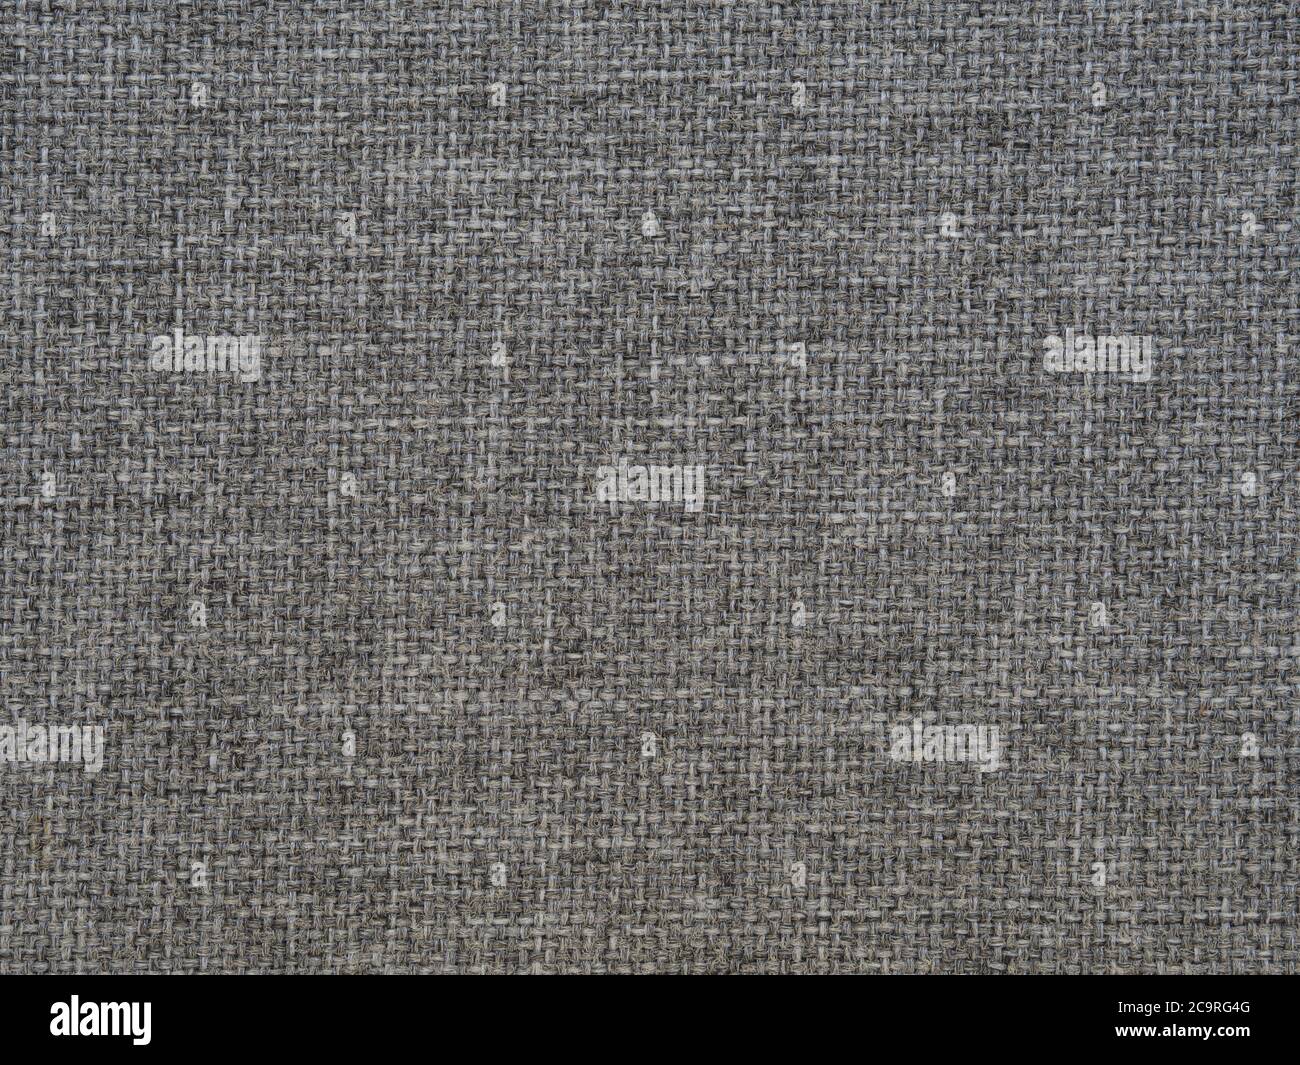 Raue graue Leinwand Textur Struktur Hintergrund Stockfotografie - Alamy